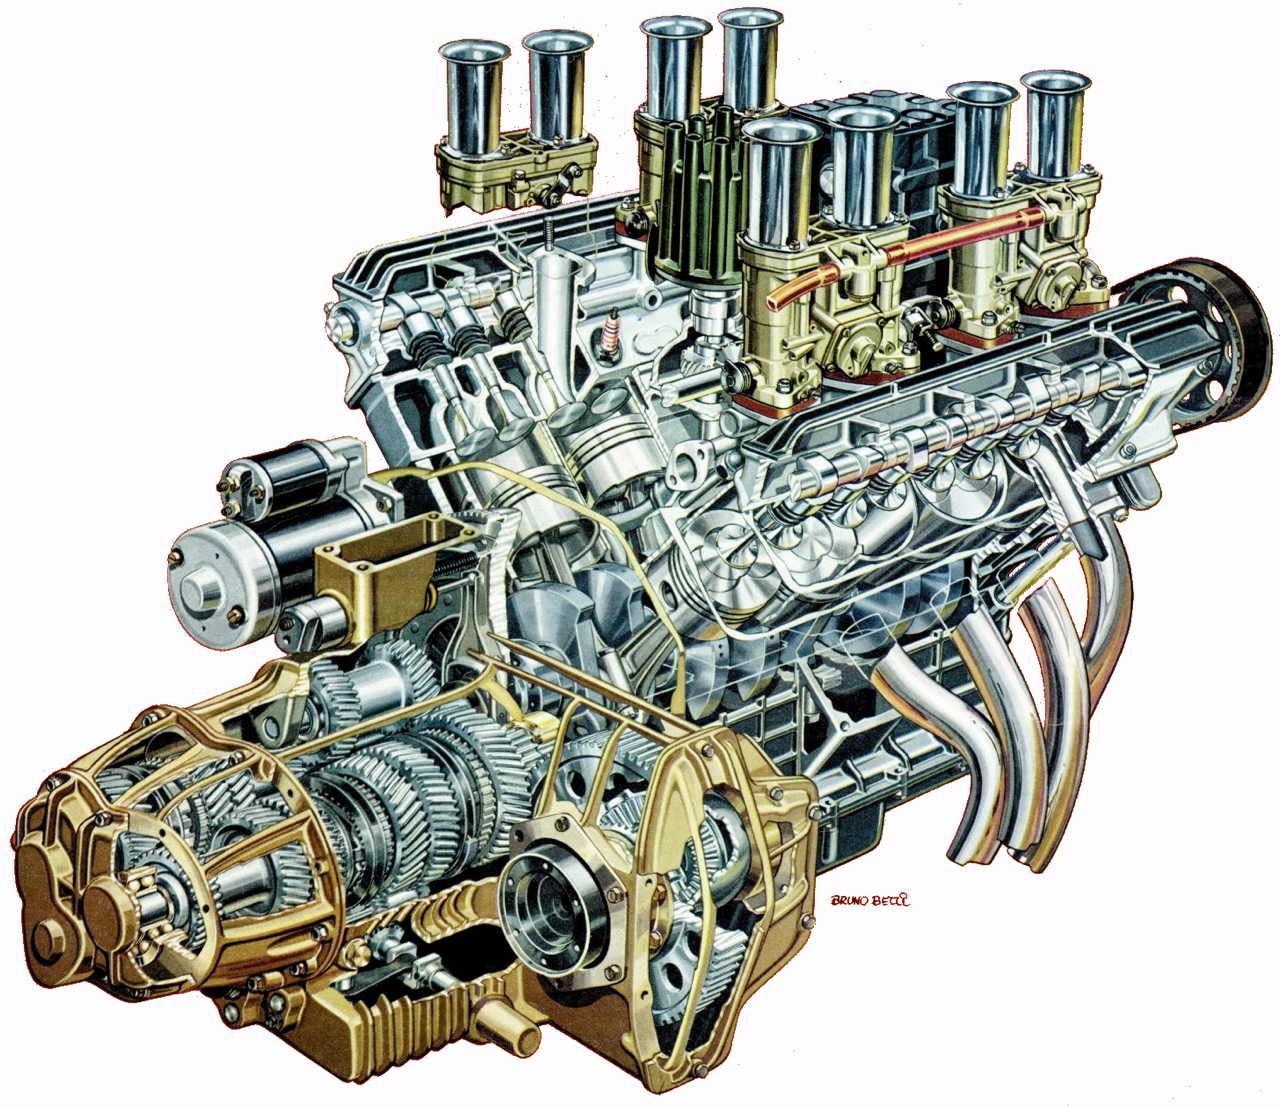 V8 engine Cutaway Drawing in High quality